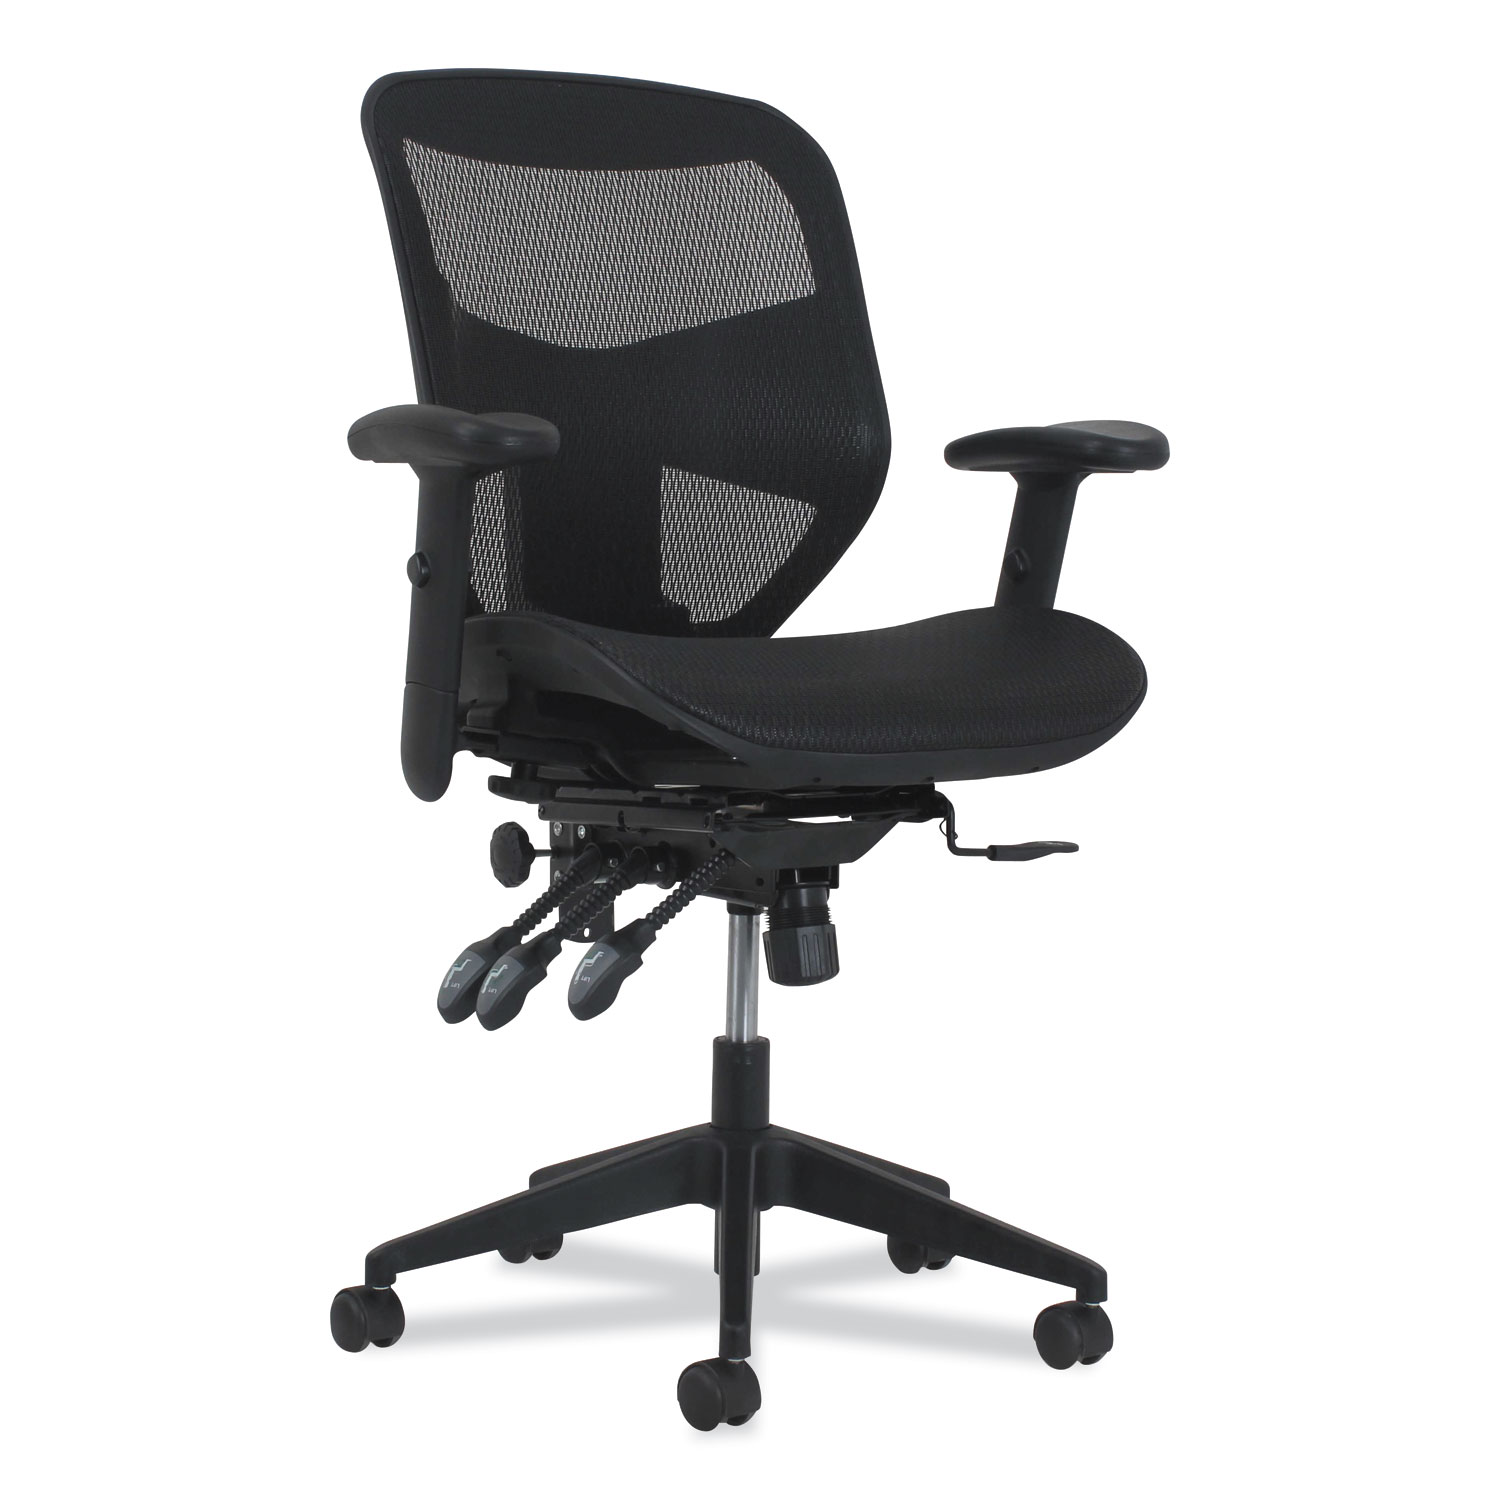  HON HONVL536MST3 Prominent Mesh High-Back Task Chair, Mesh, Supports up to 250 lbs., Black Seat/Back and Base (HONVL536MST3) 